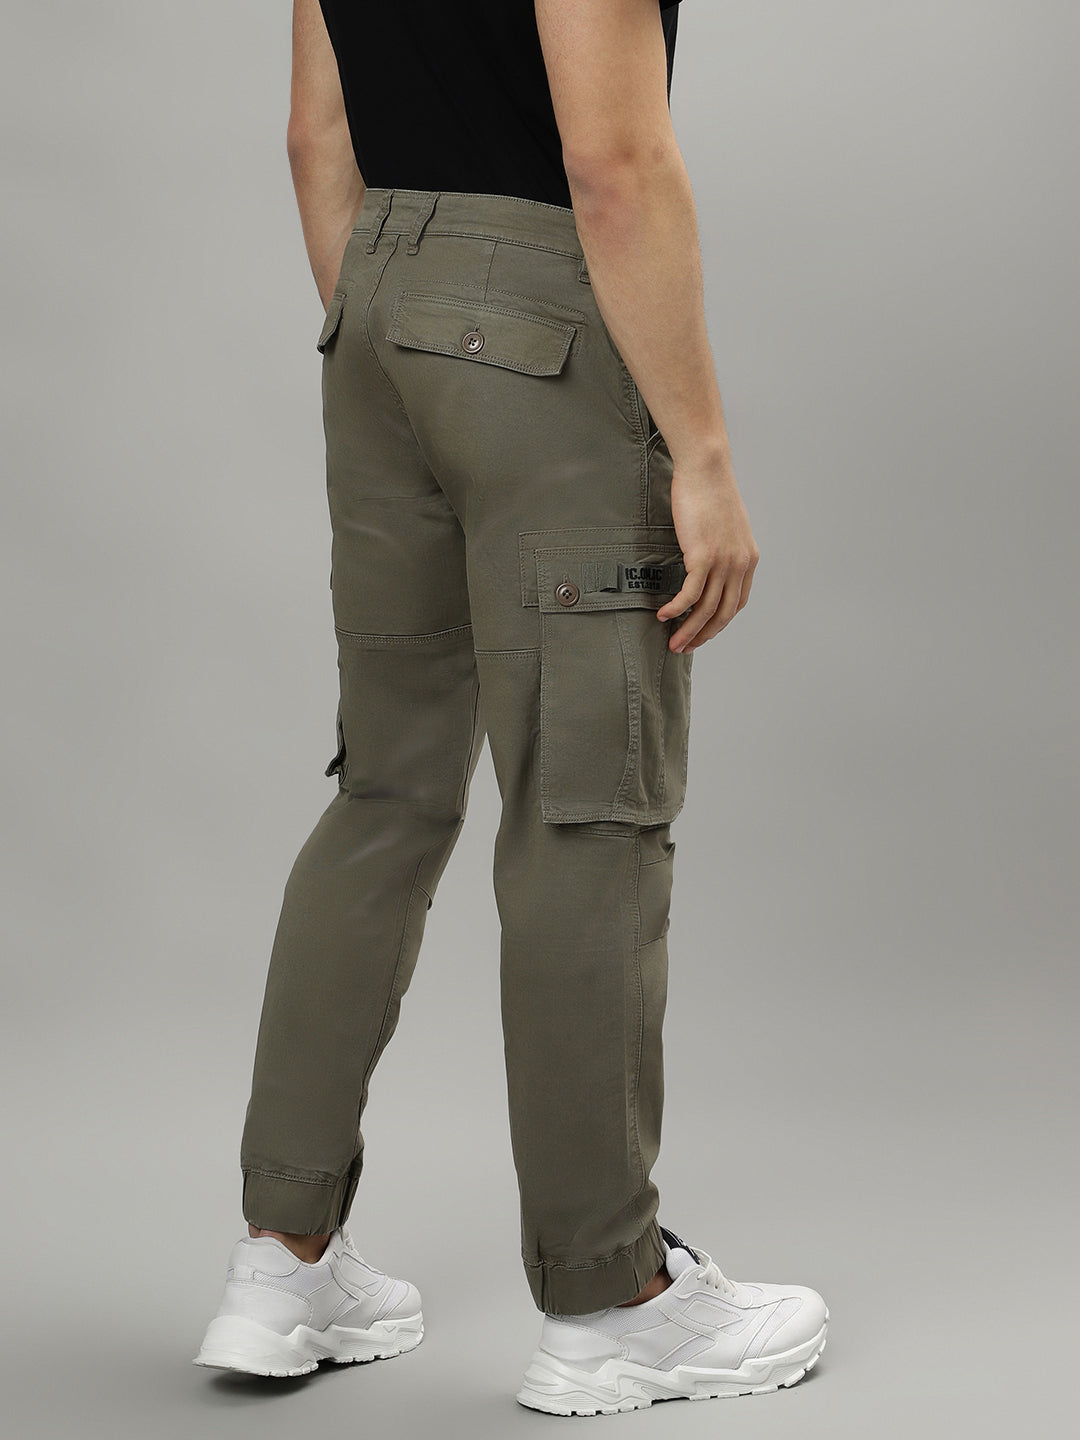 Brglopf Men's Classic Multi Pockets Slim Cargo Pants Hiking Combat Work  Trousers Outdoor Casual Straight Leg Sweatpants(Khaki,XL) - Walmart.com